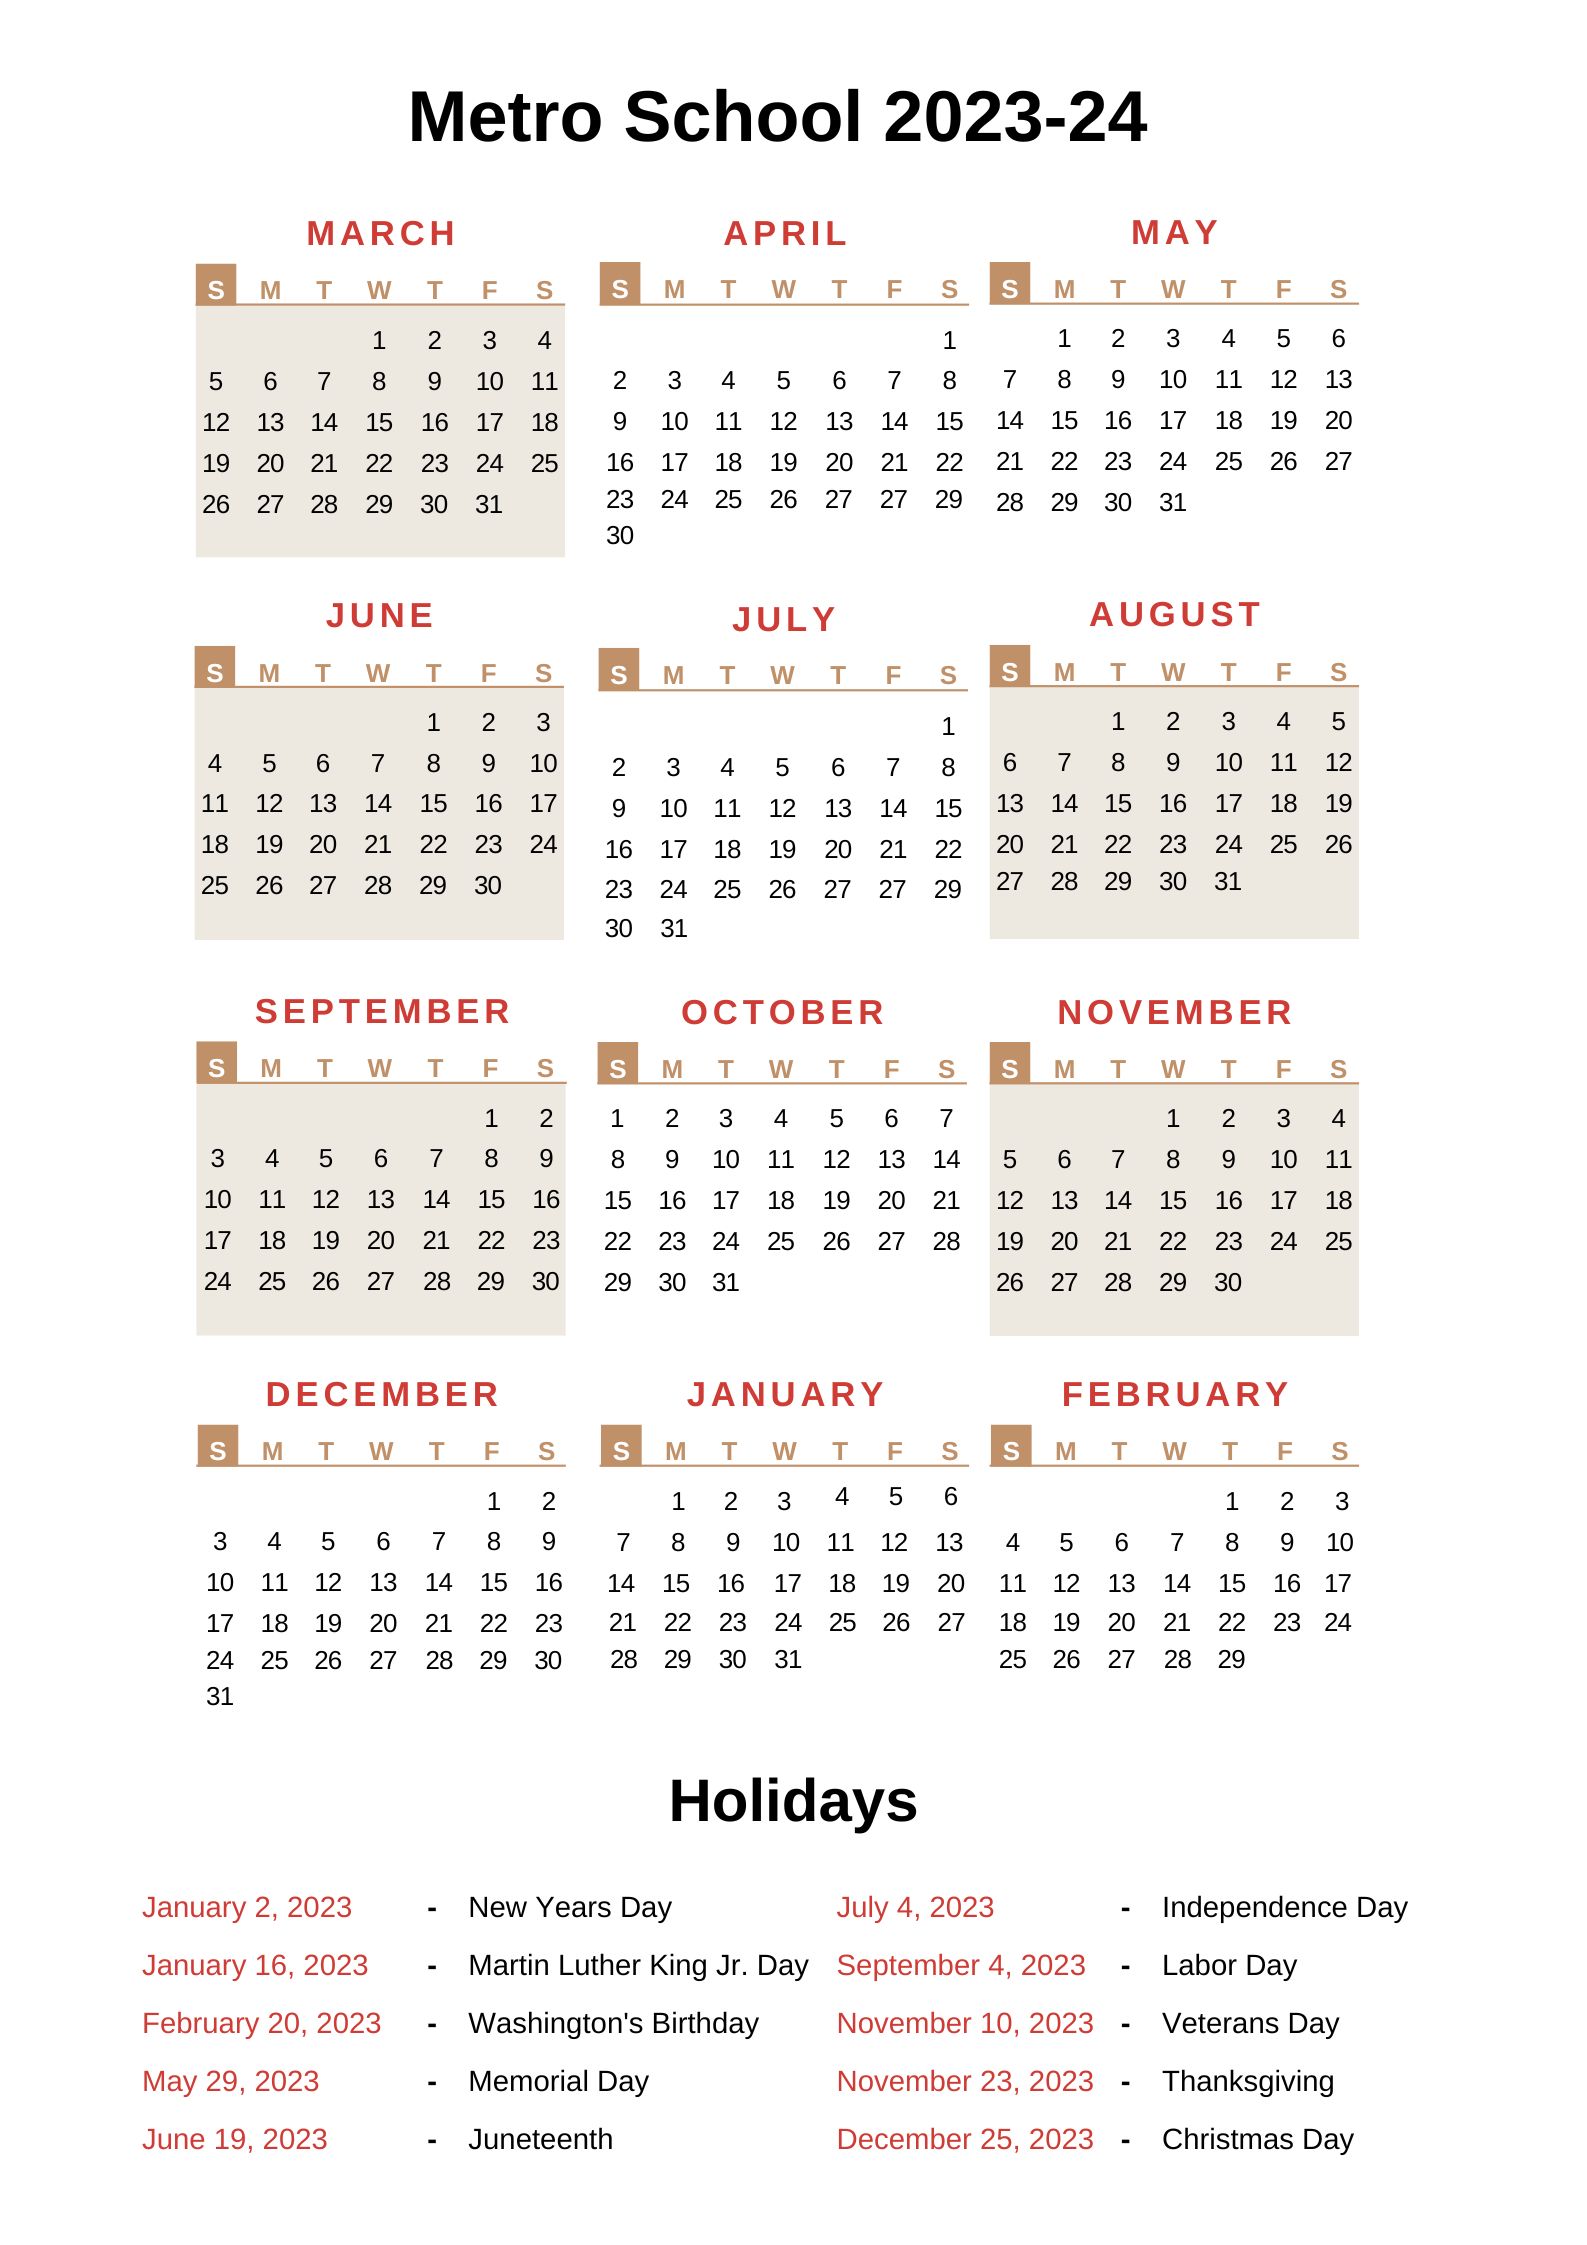 Metro Schools Calendar 2023 24 1 